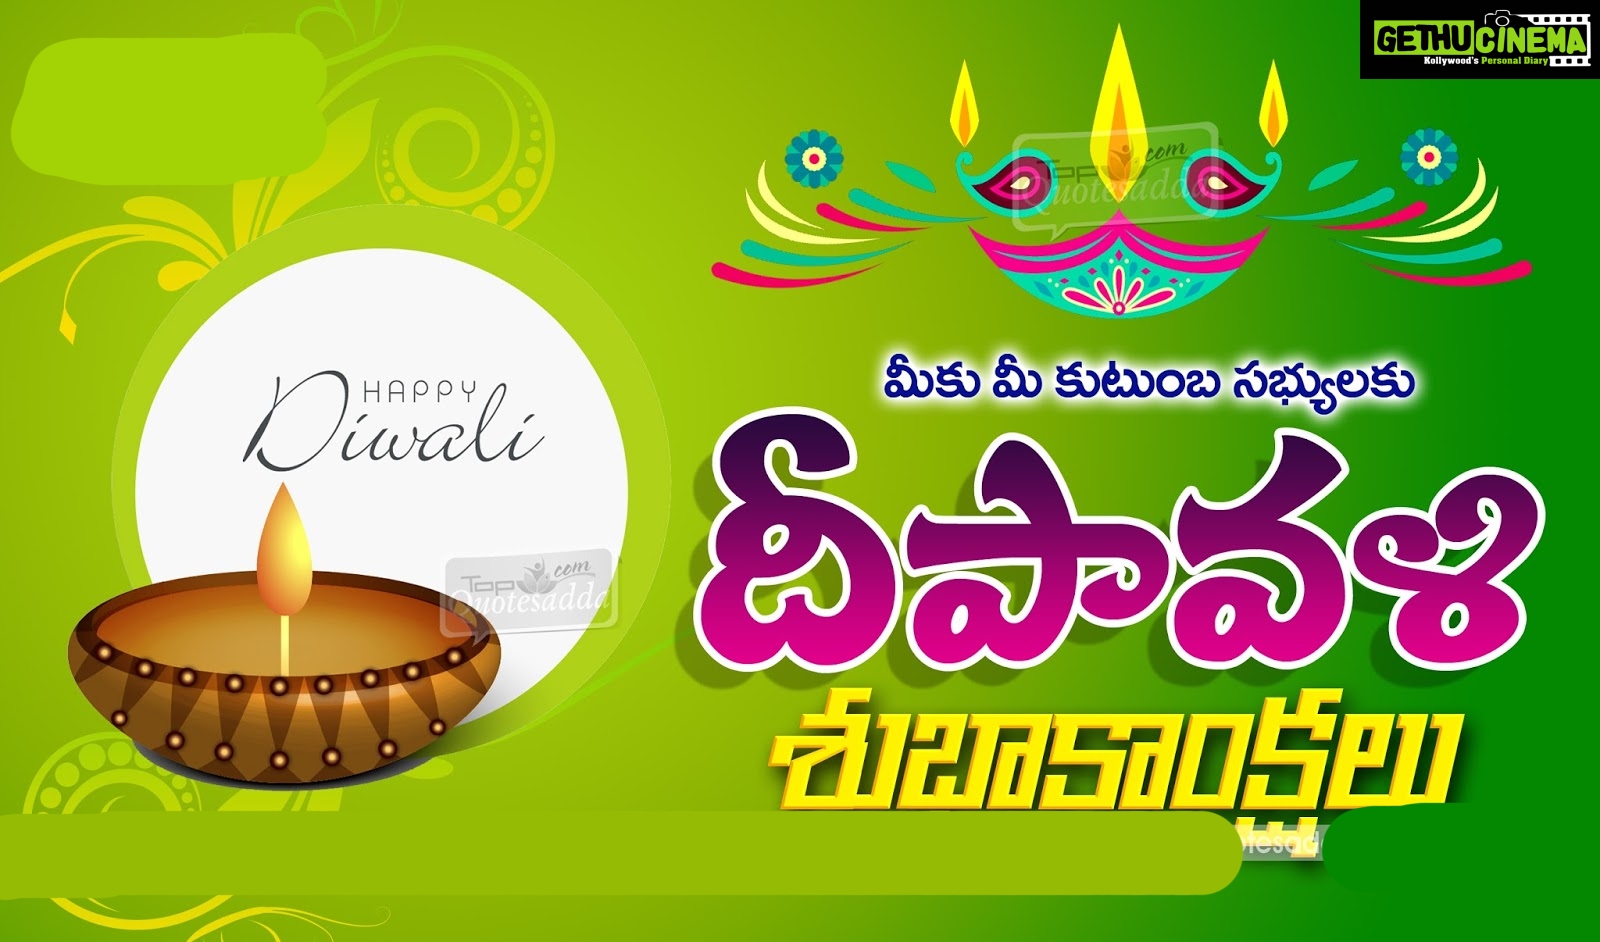 Happy Diwali wishes telugu, best, cute, greetings - Gethu Cinema